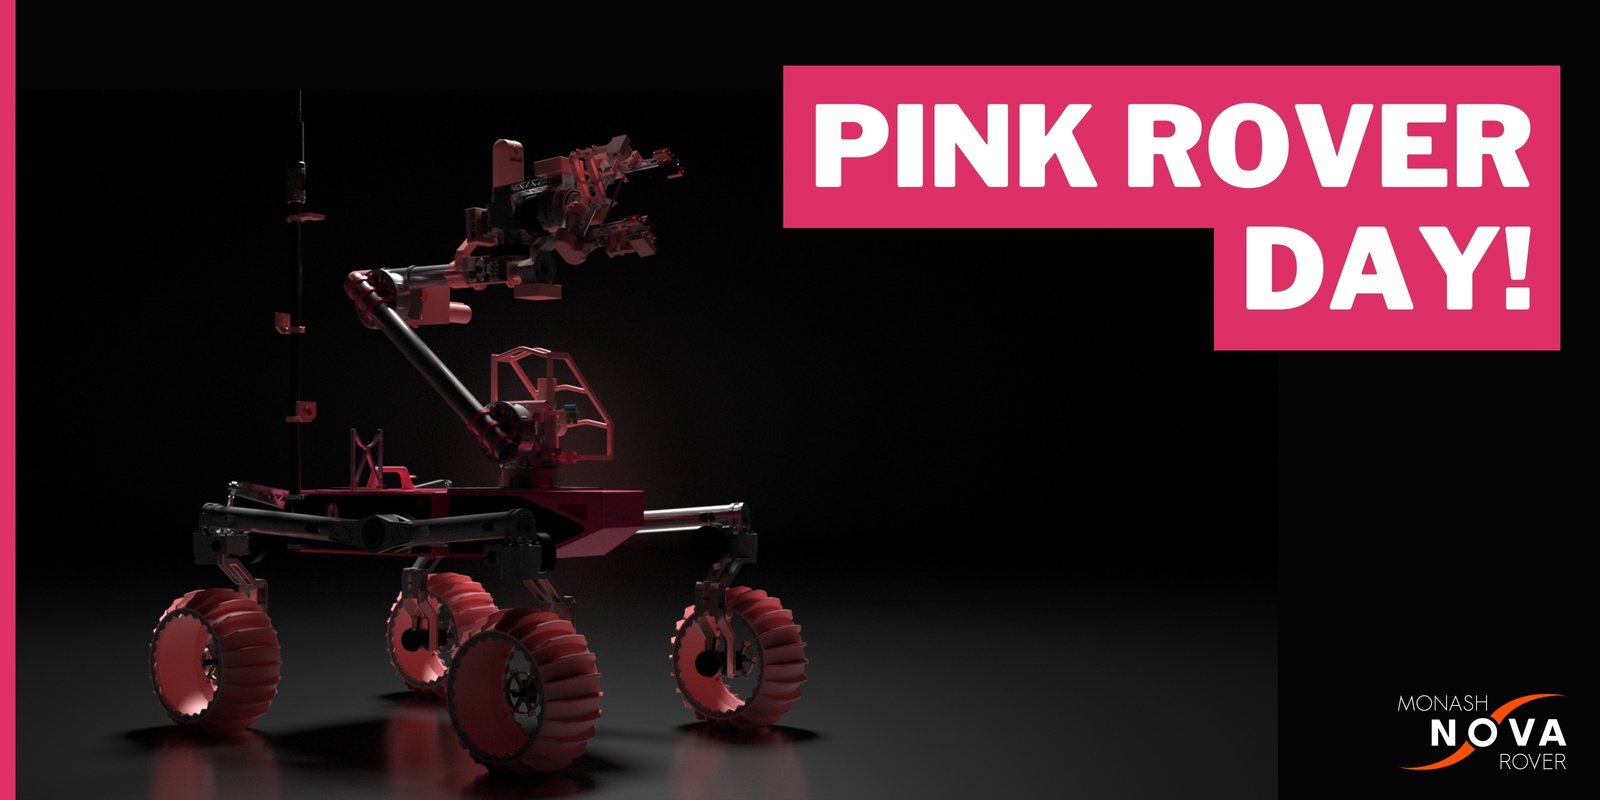 Banner image for Monash Nova Rover Pink Rover Day